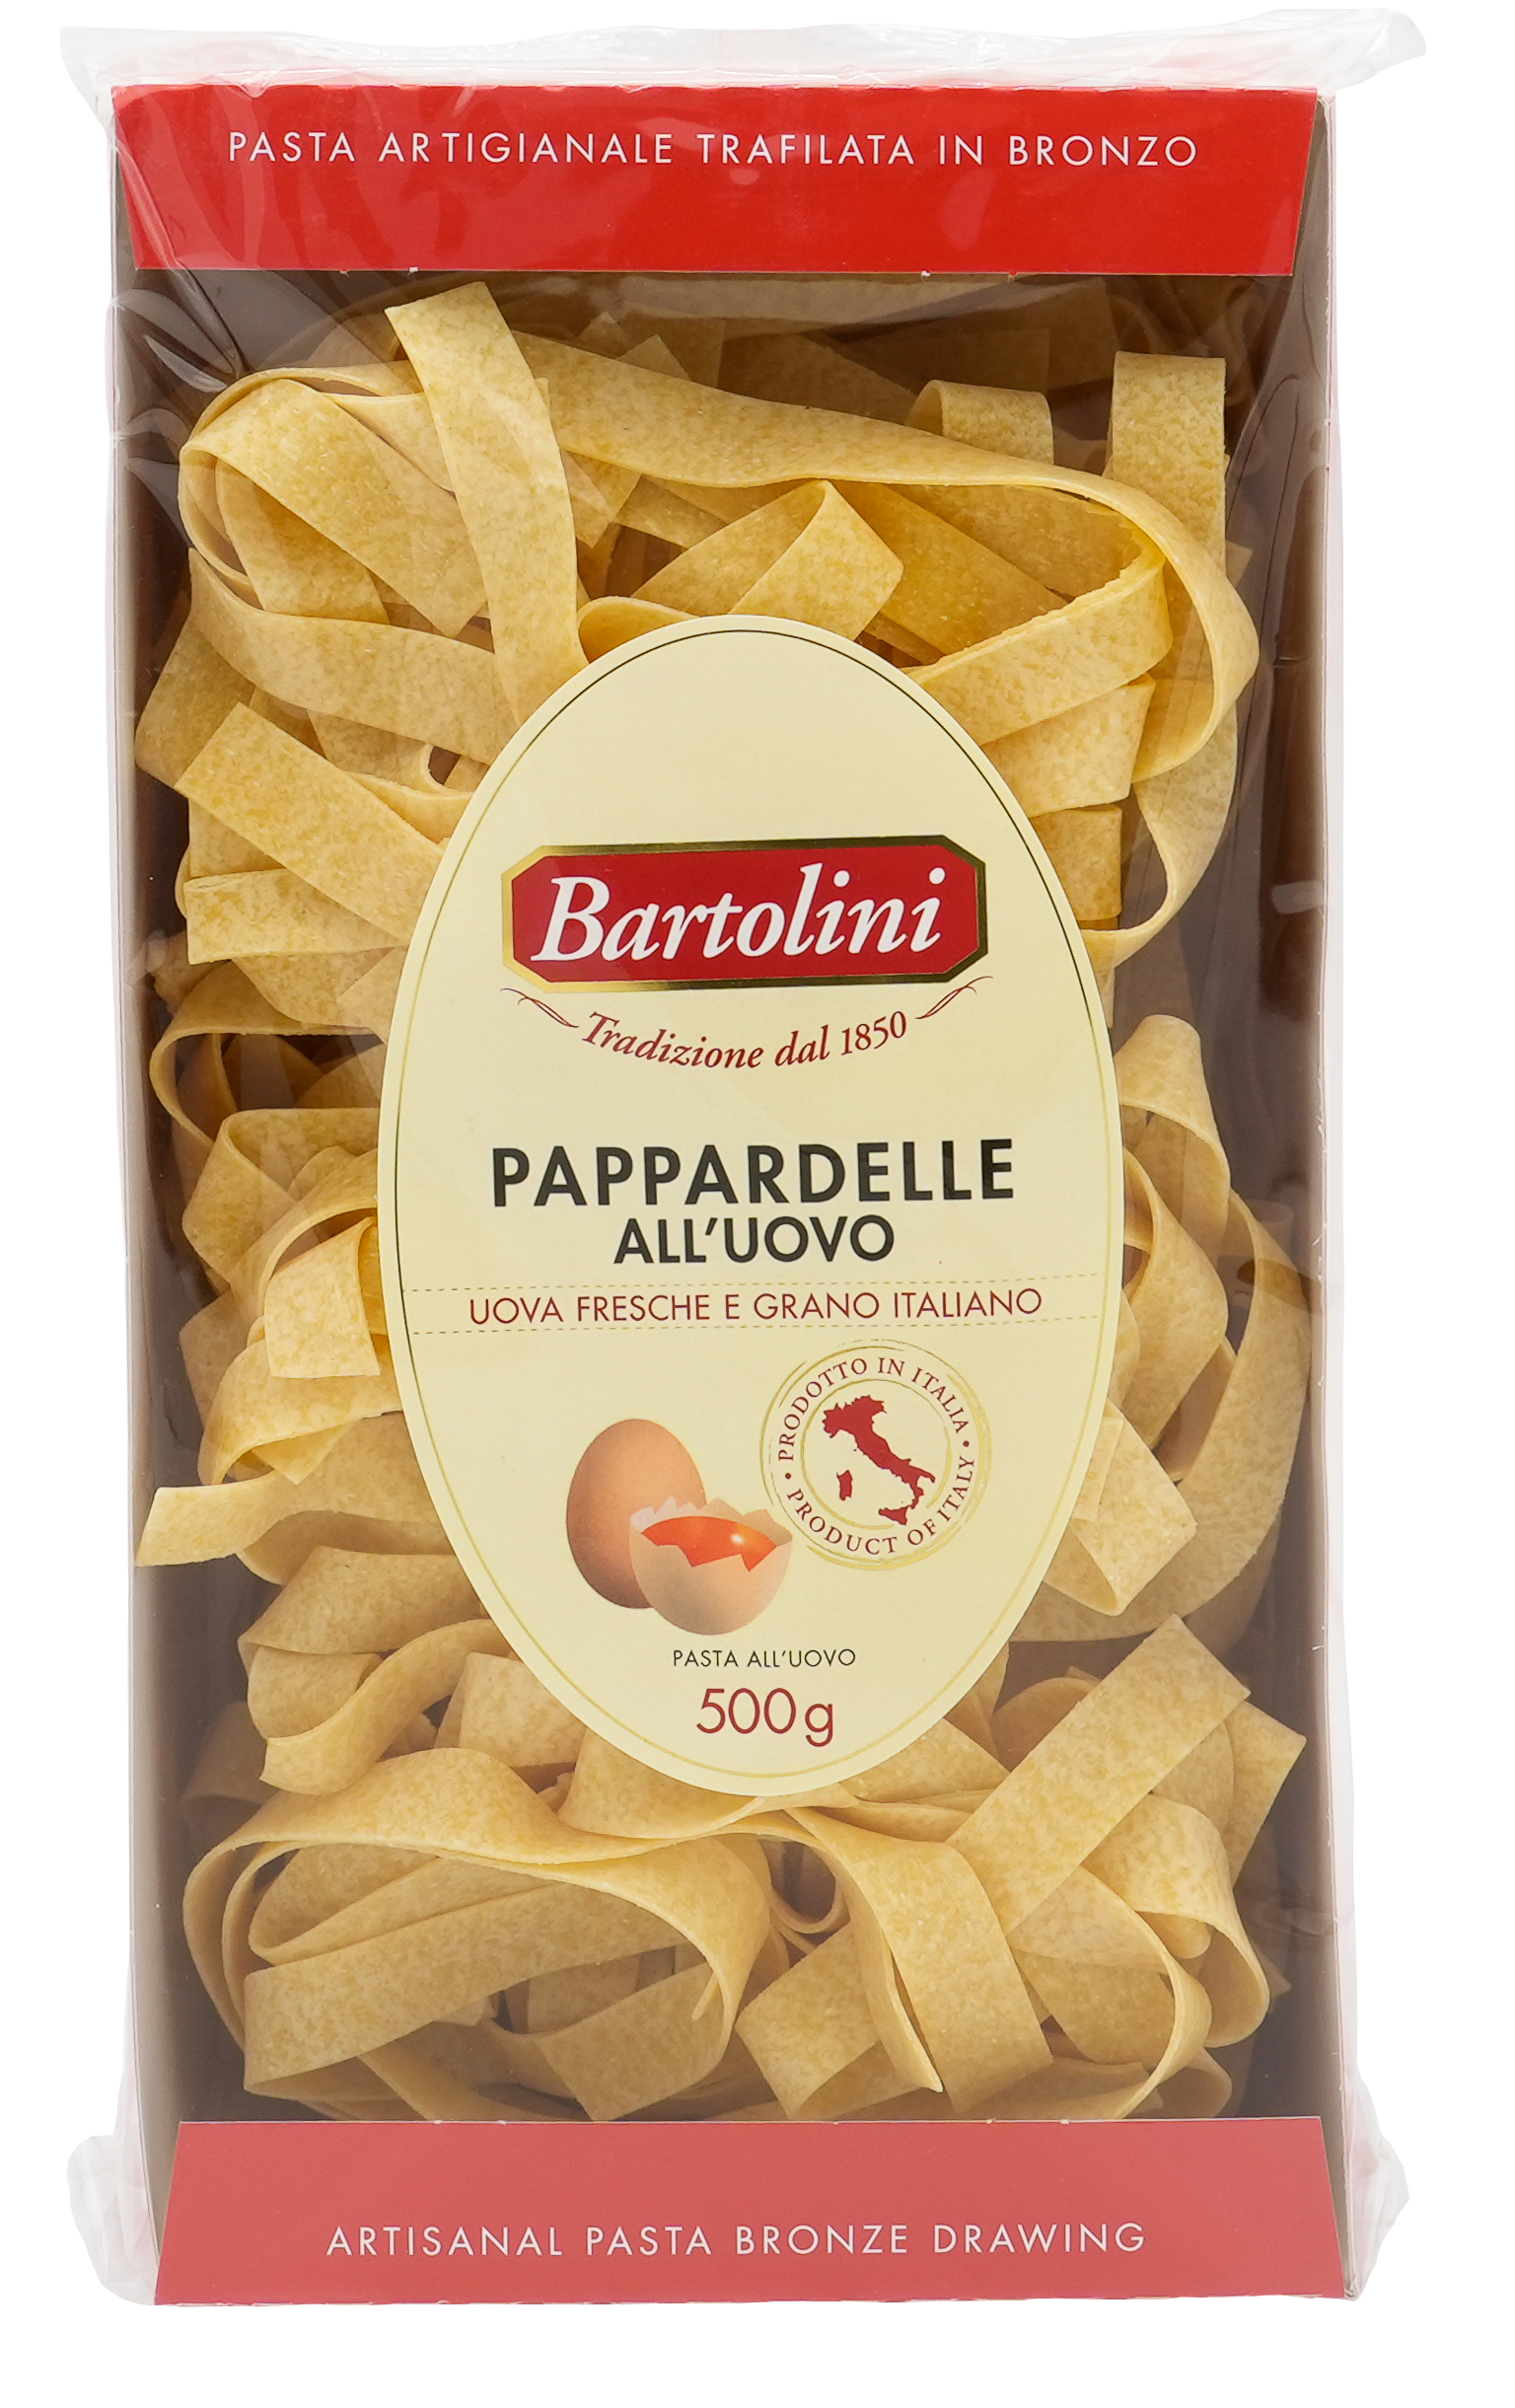 PAPPARDELLE ALL’UOVO | BARTOLINI | 500g | aus Italien | Premium Pasta